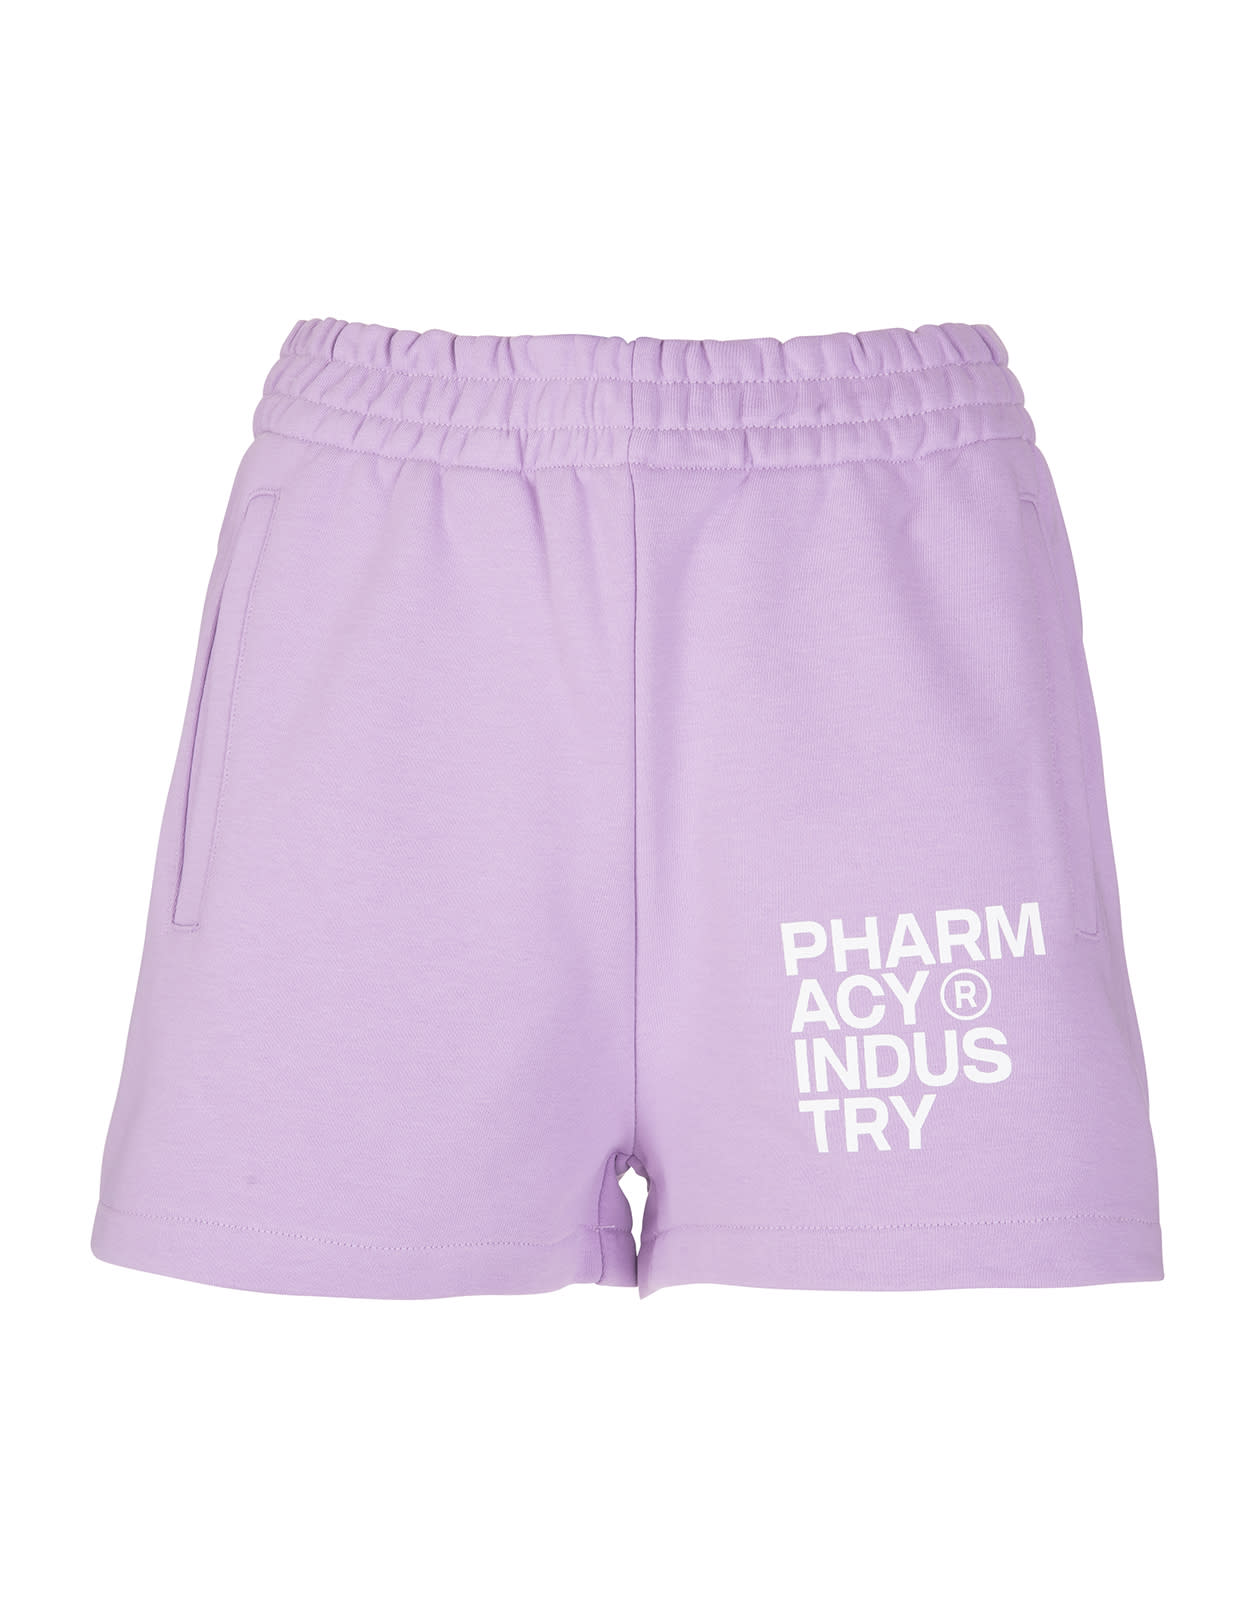 Pharmacy Industry Woman Wisteria Historical Logo Sports Shorts